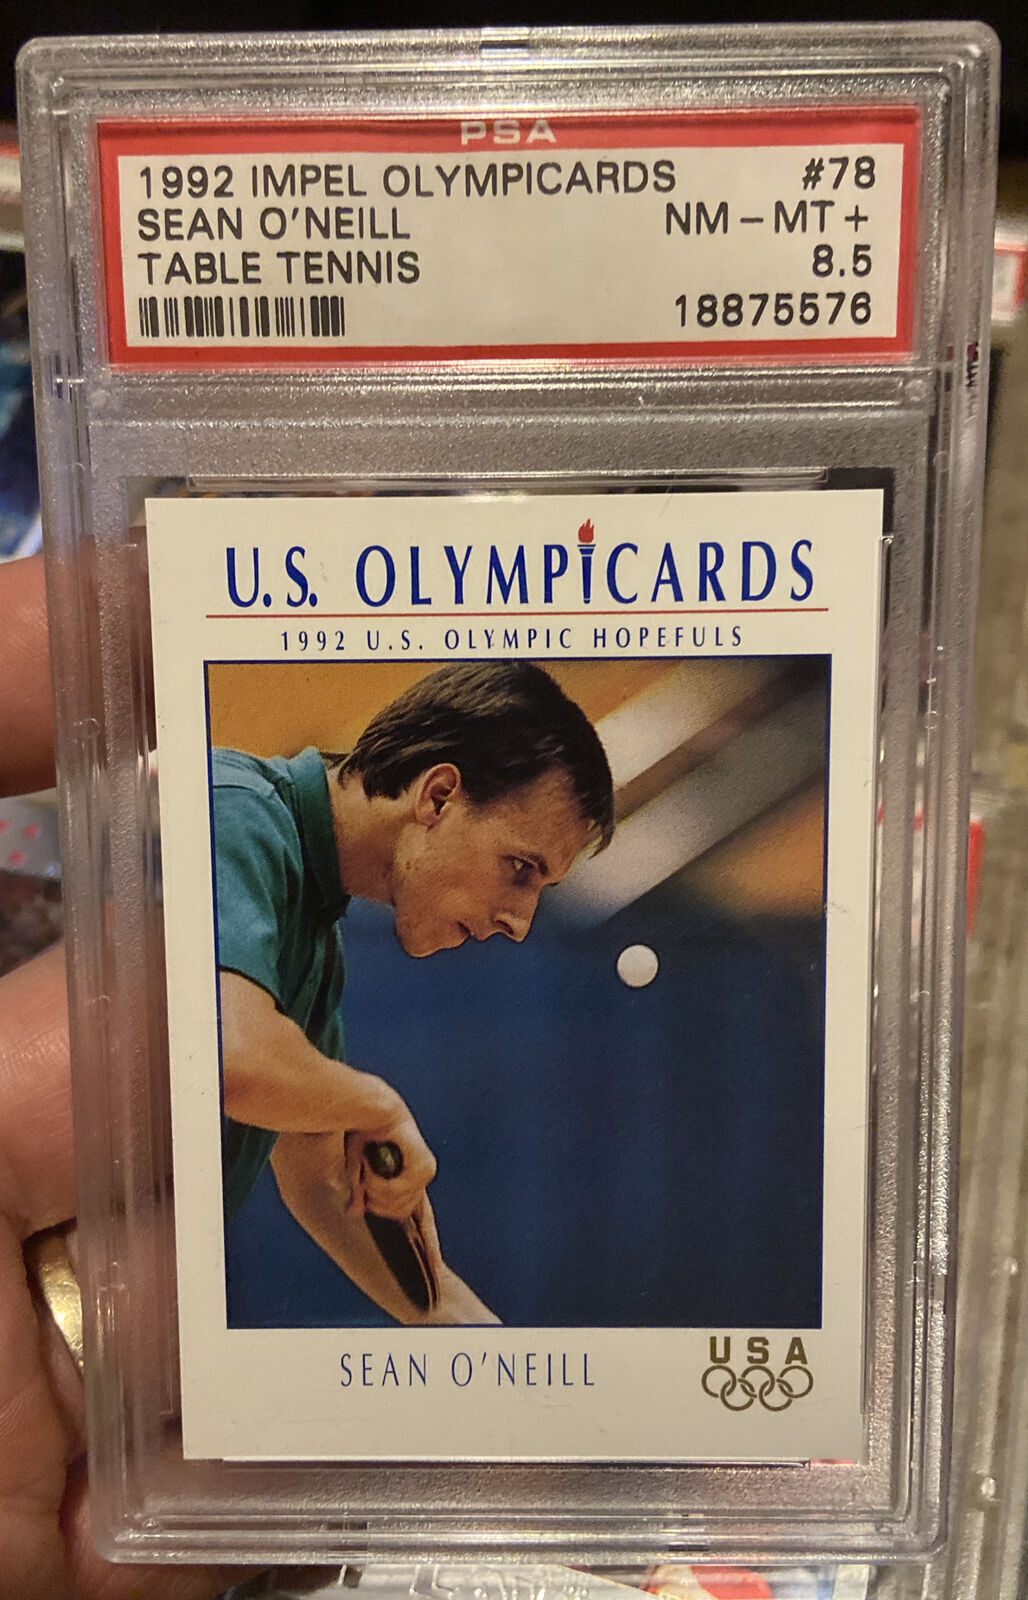 1992 Impel Olympicards #78 Sean O’neill Table Tennis Rookie Card Psa 8.5 Pop 1/1